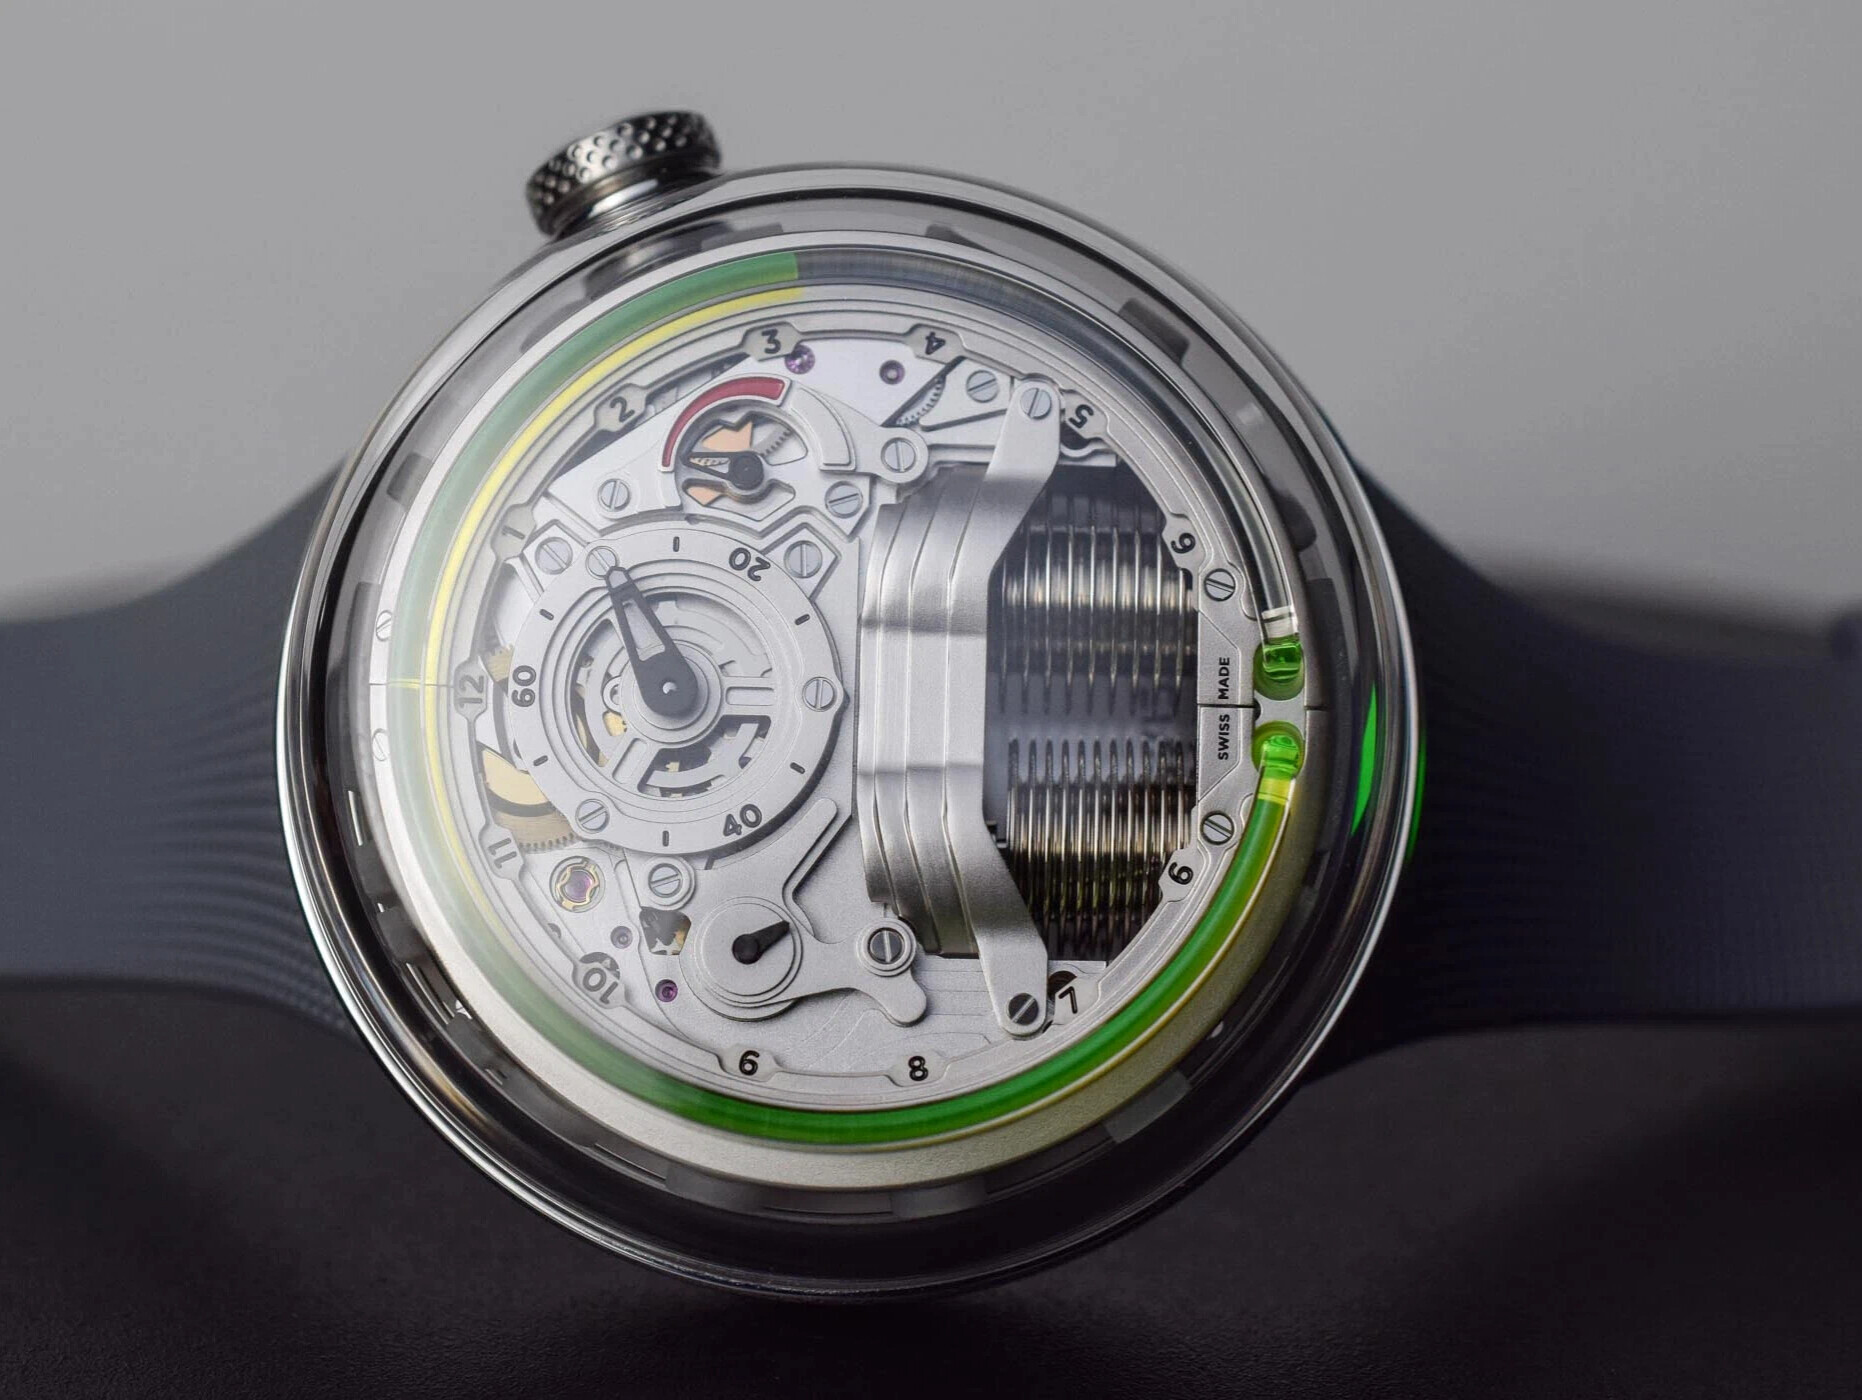 Clock with liquid hands. - My, Wrist Watch, Clock, Technologies, Unusual, Longpost